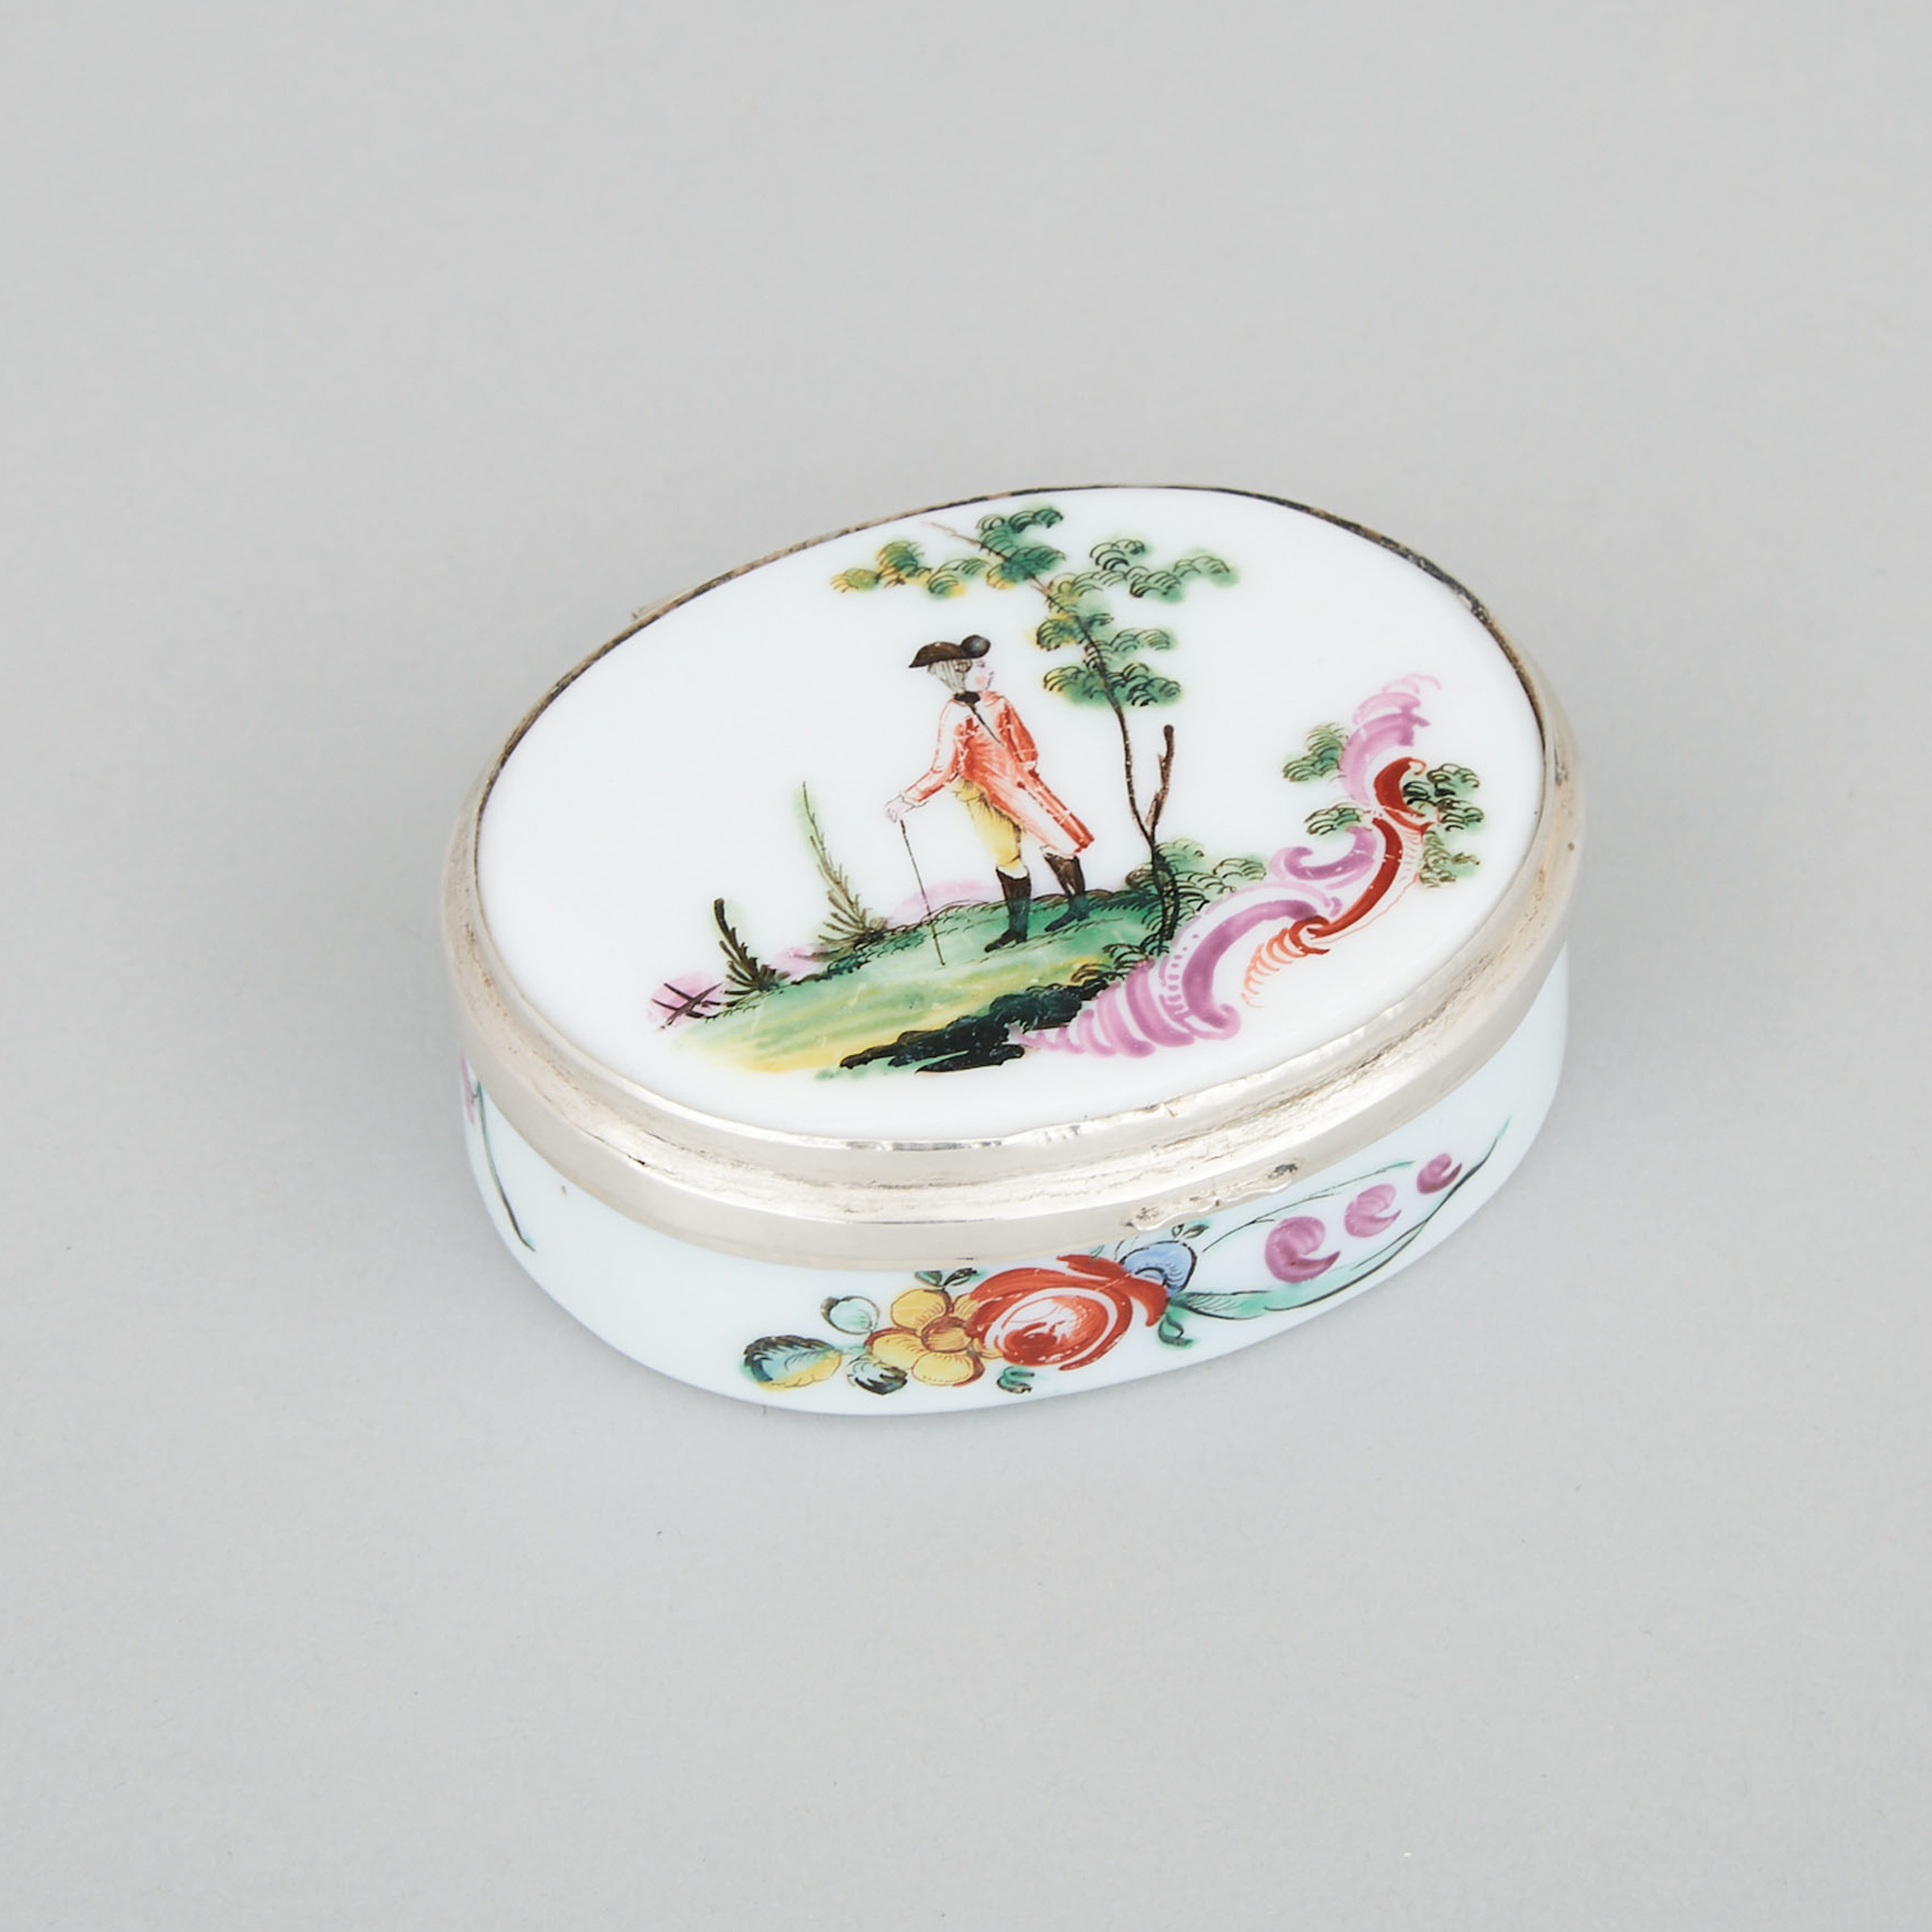 Bohemian Enamelled Milk Glass Oval Snuff Box, early 19th century